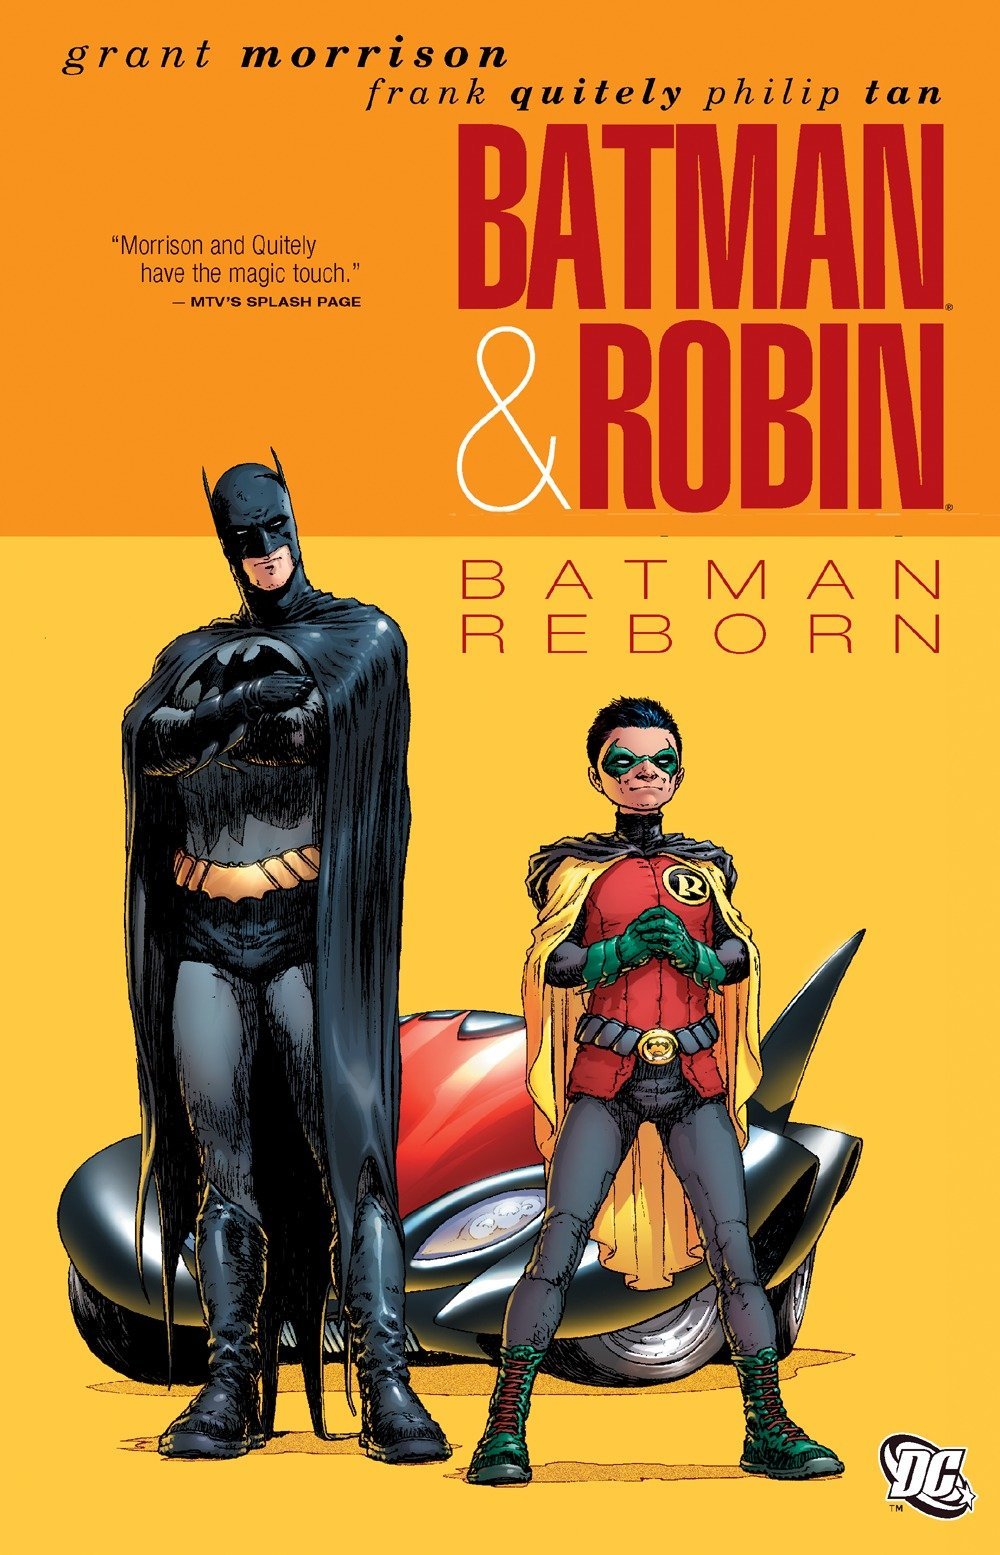 claire kingswood recommends Imagenes De Batman Y Robin